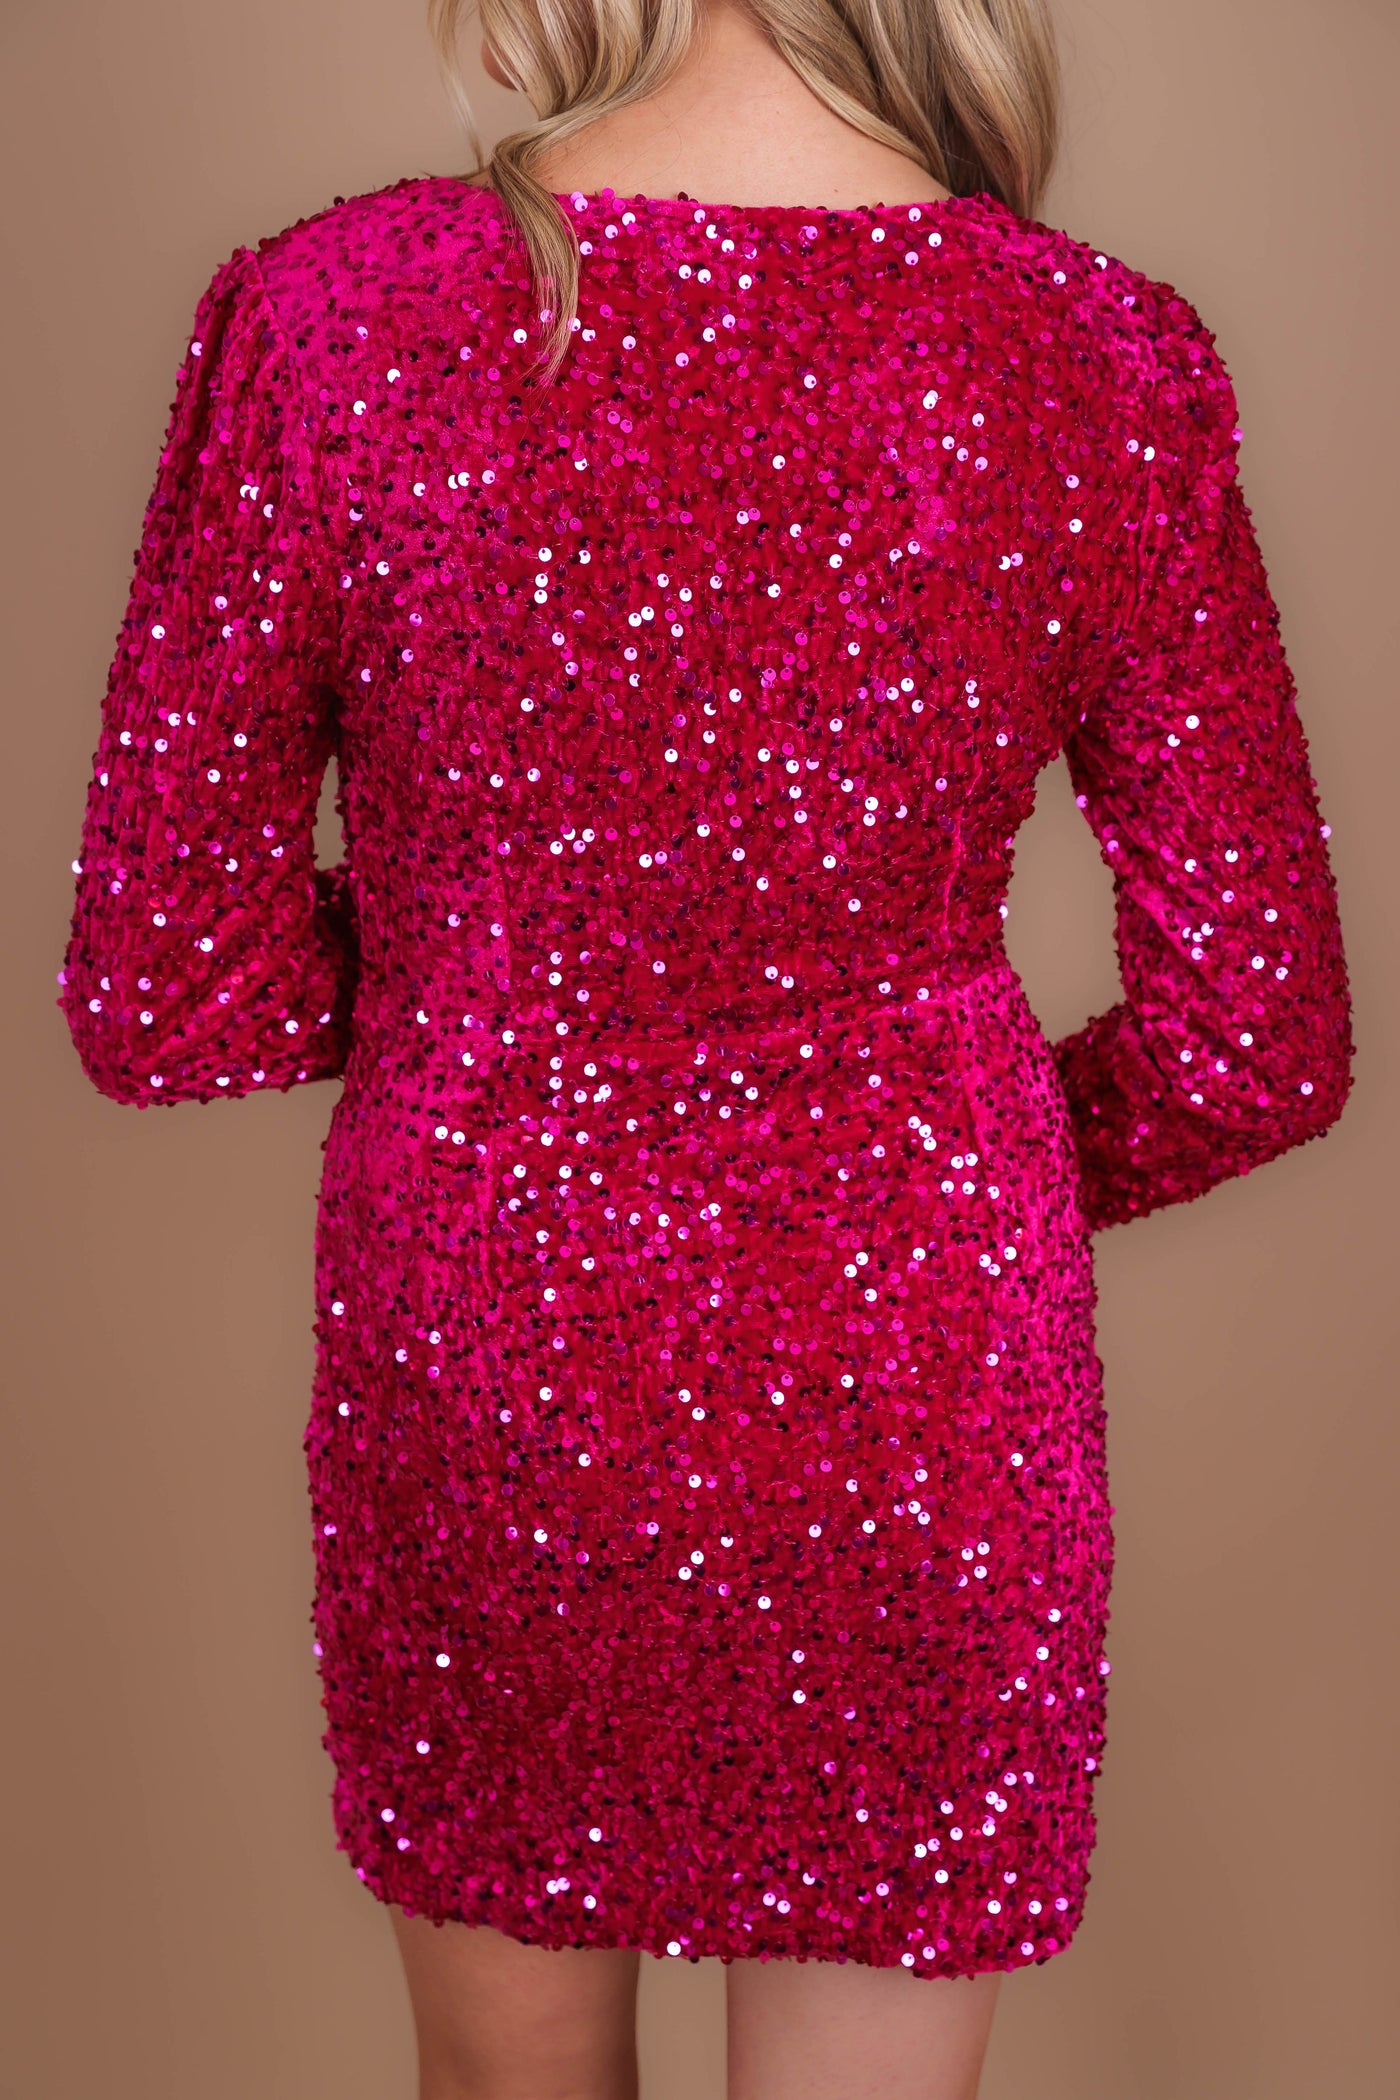 Women's Hot Pink Sequin Dress- Women's Mini Pink Sequin Dress- Very J Dresses